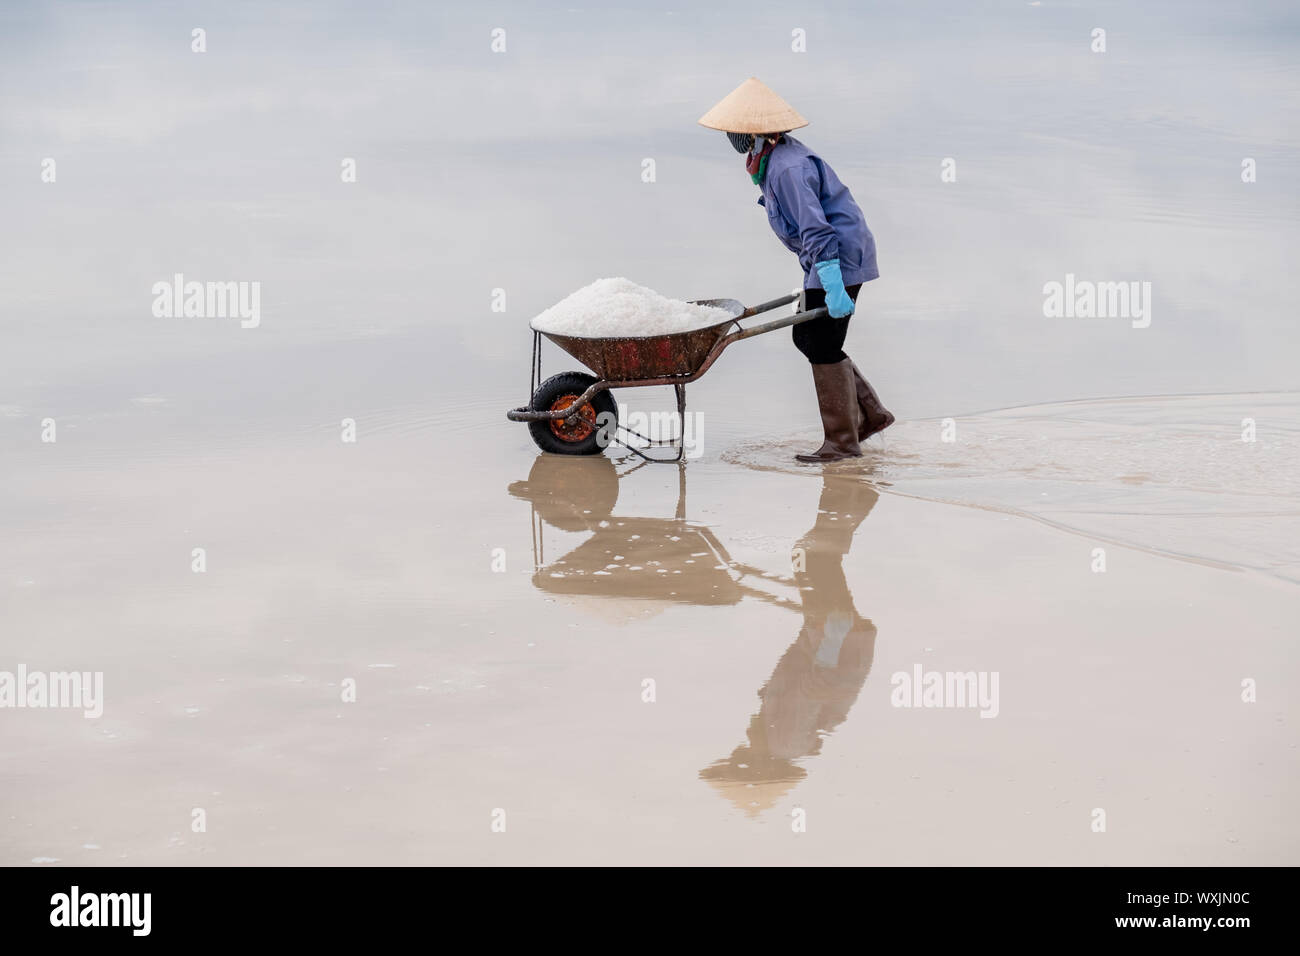 Salt farmer pushing a wheelbarrow filled with salt, Nha Trang, Vietnam Stock Photo